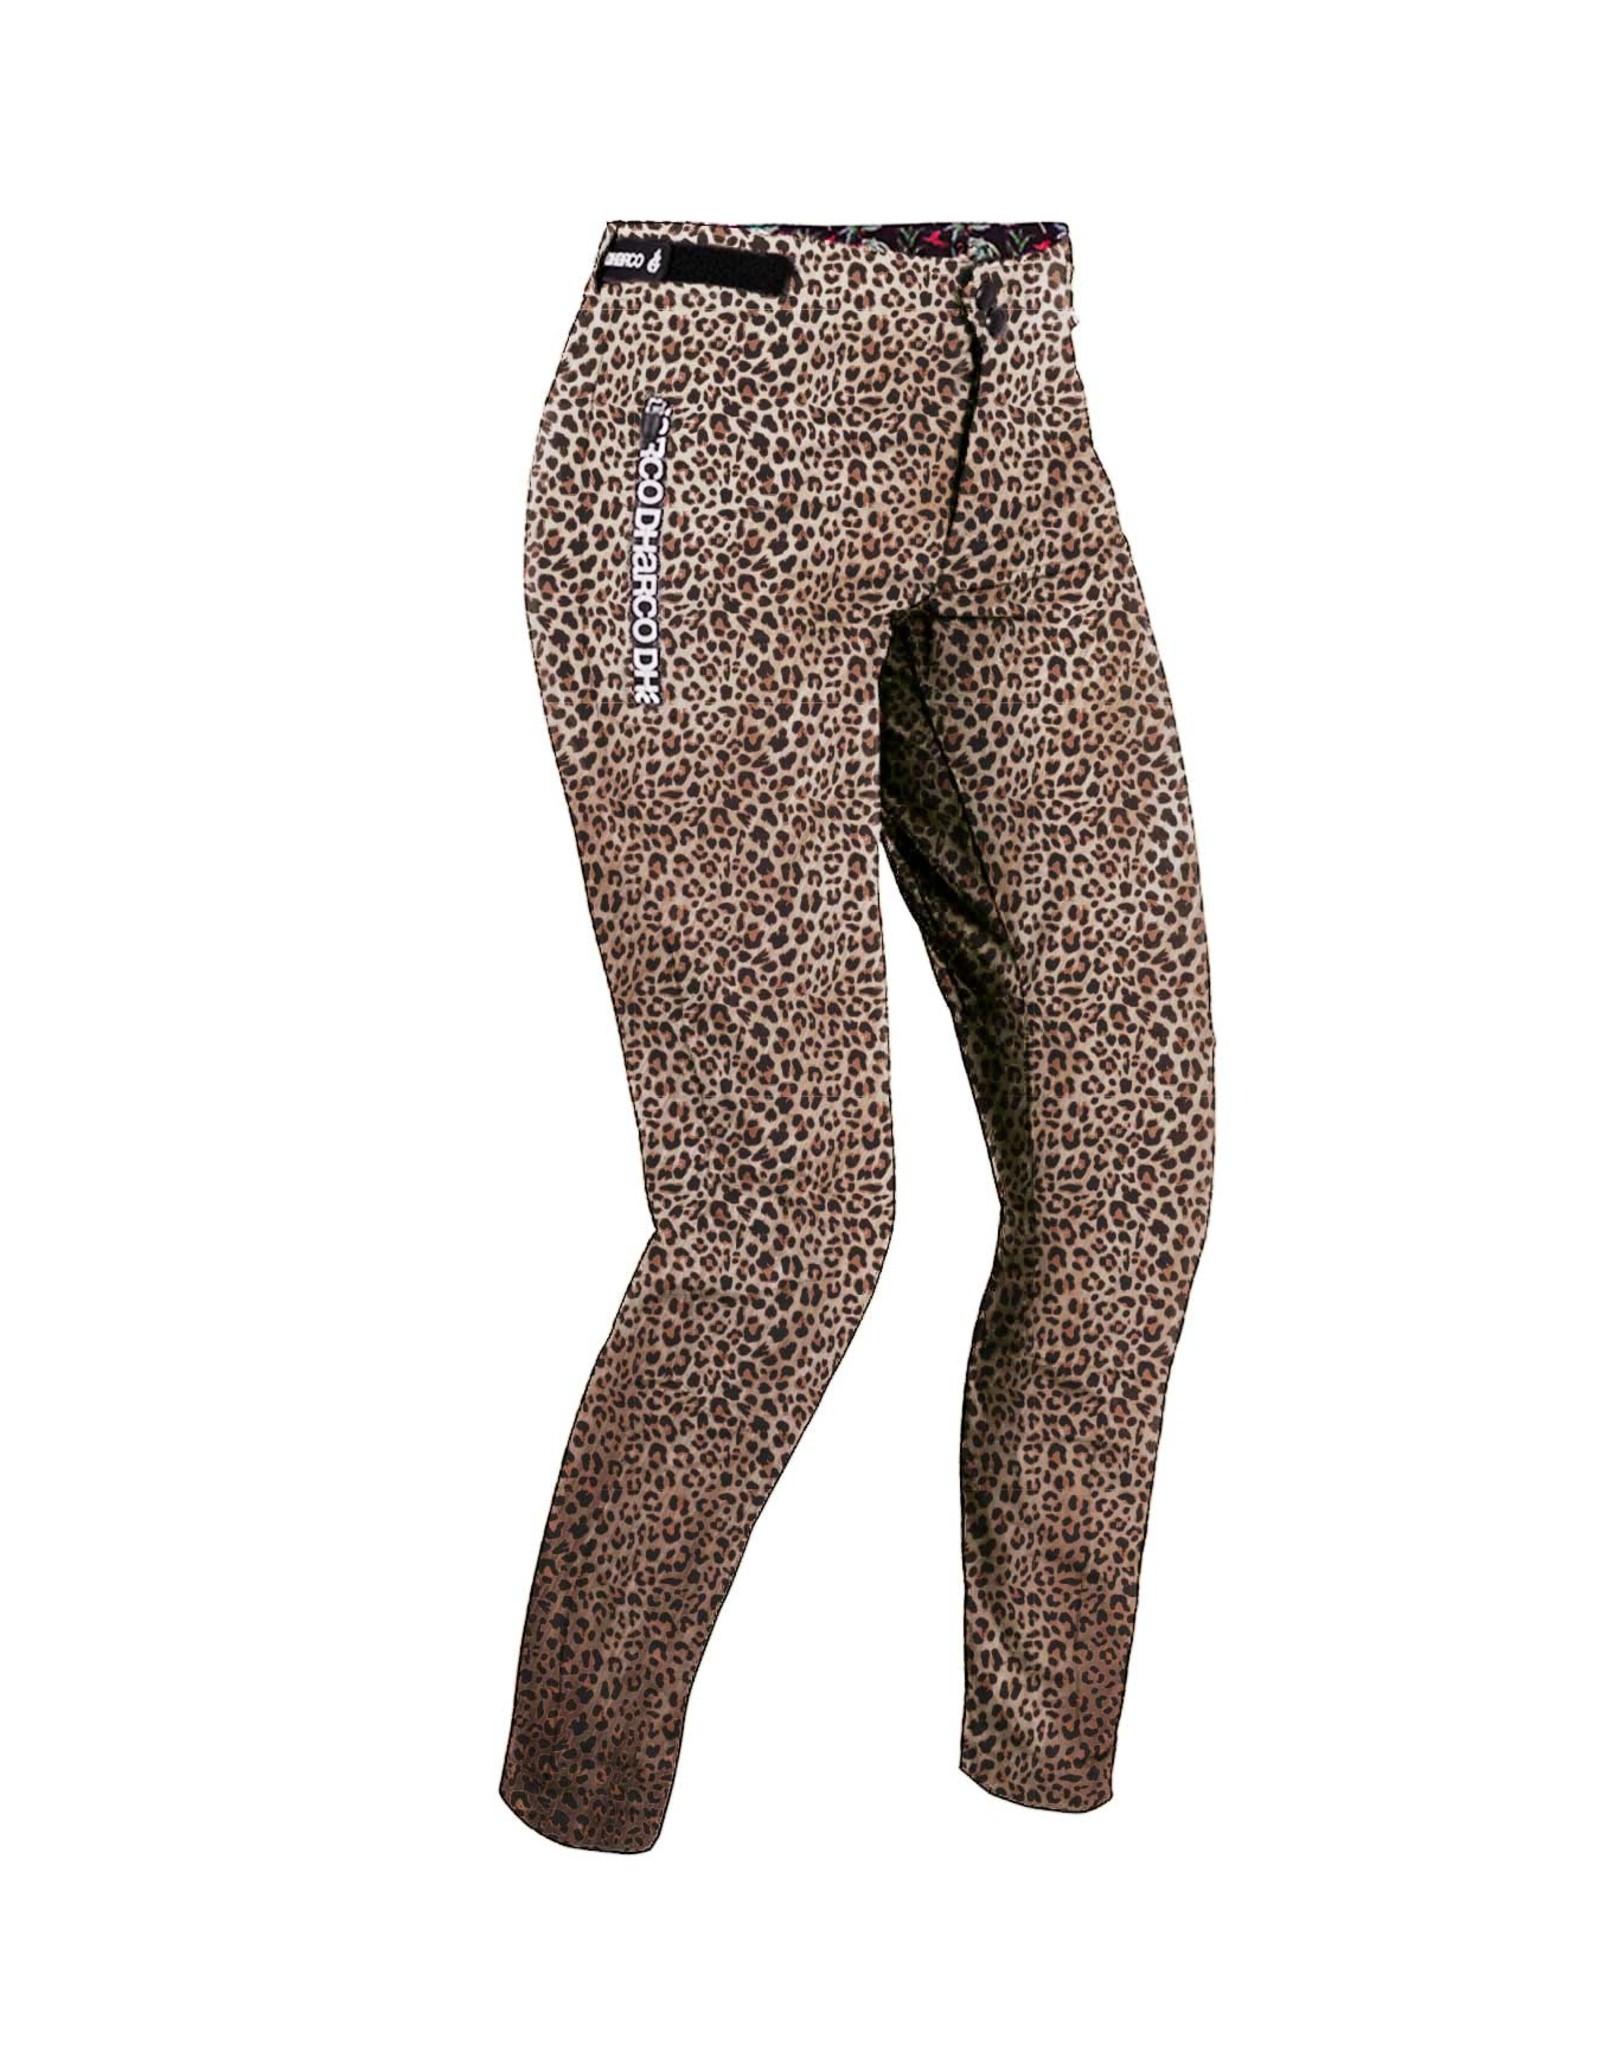 dharco Dharco Women's Gravity Leopard Pant